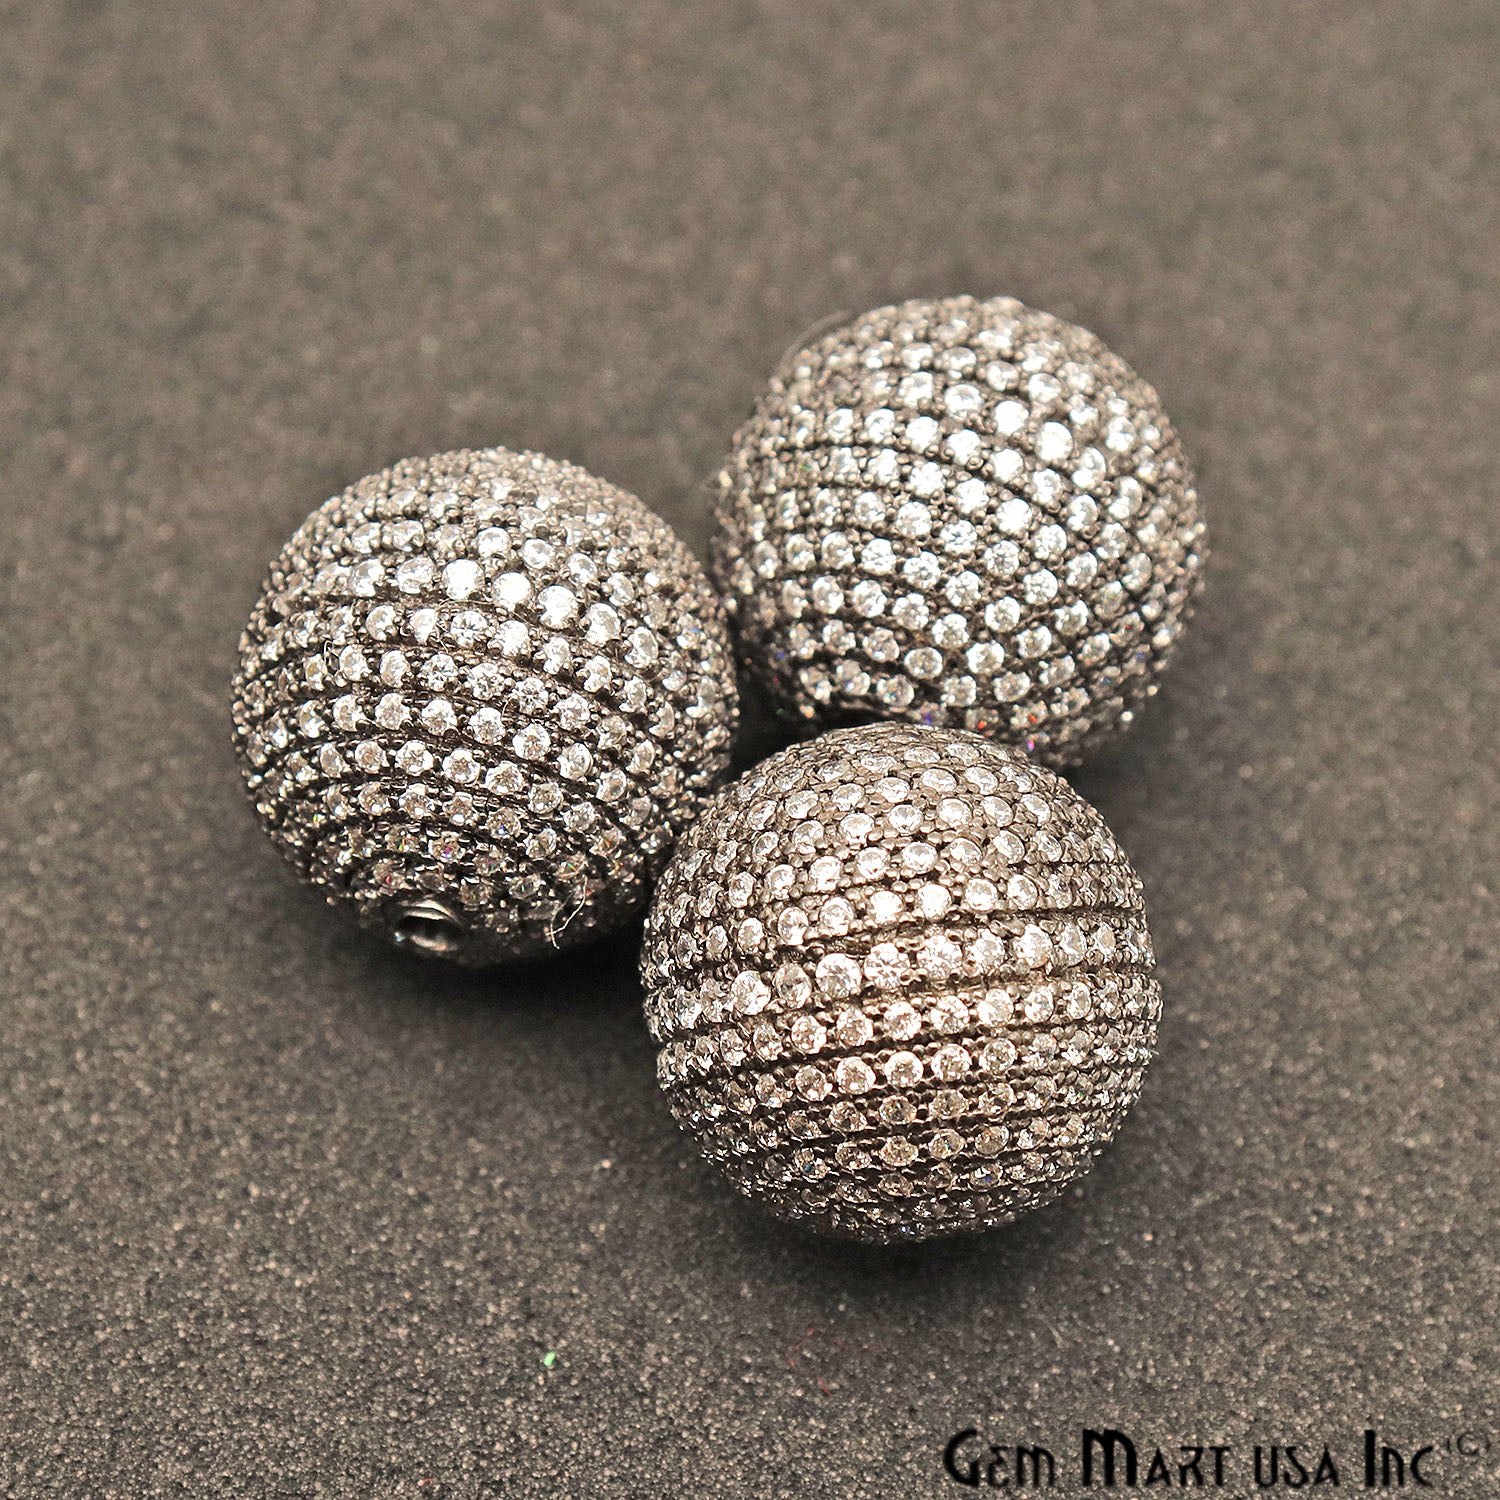 Cubic Zircon Round Beads Ball Silver Charm For Bracelet & Pendants - GemMartUSA